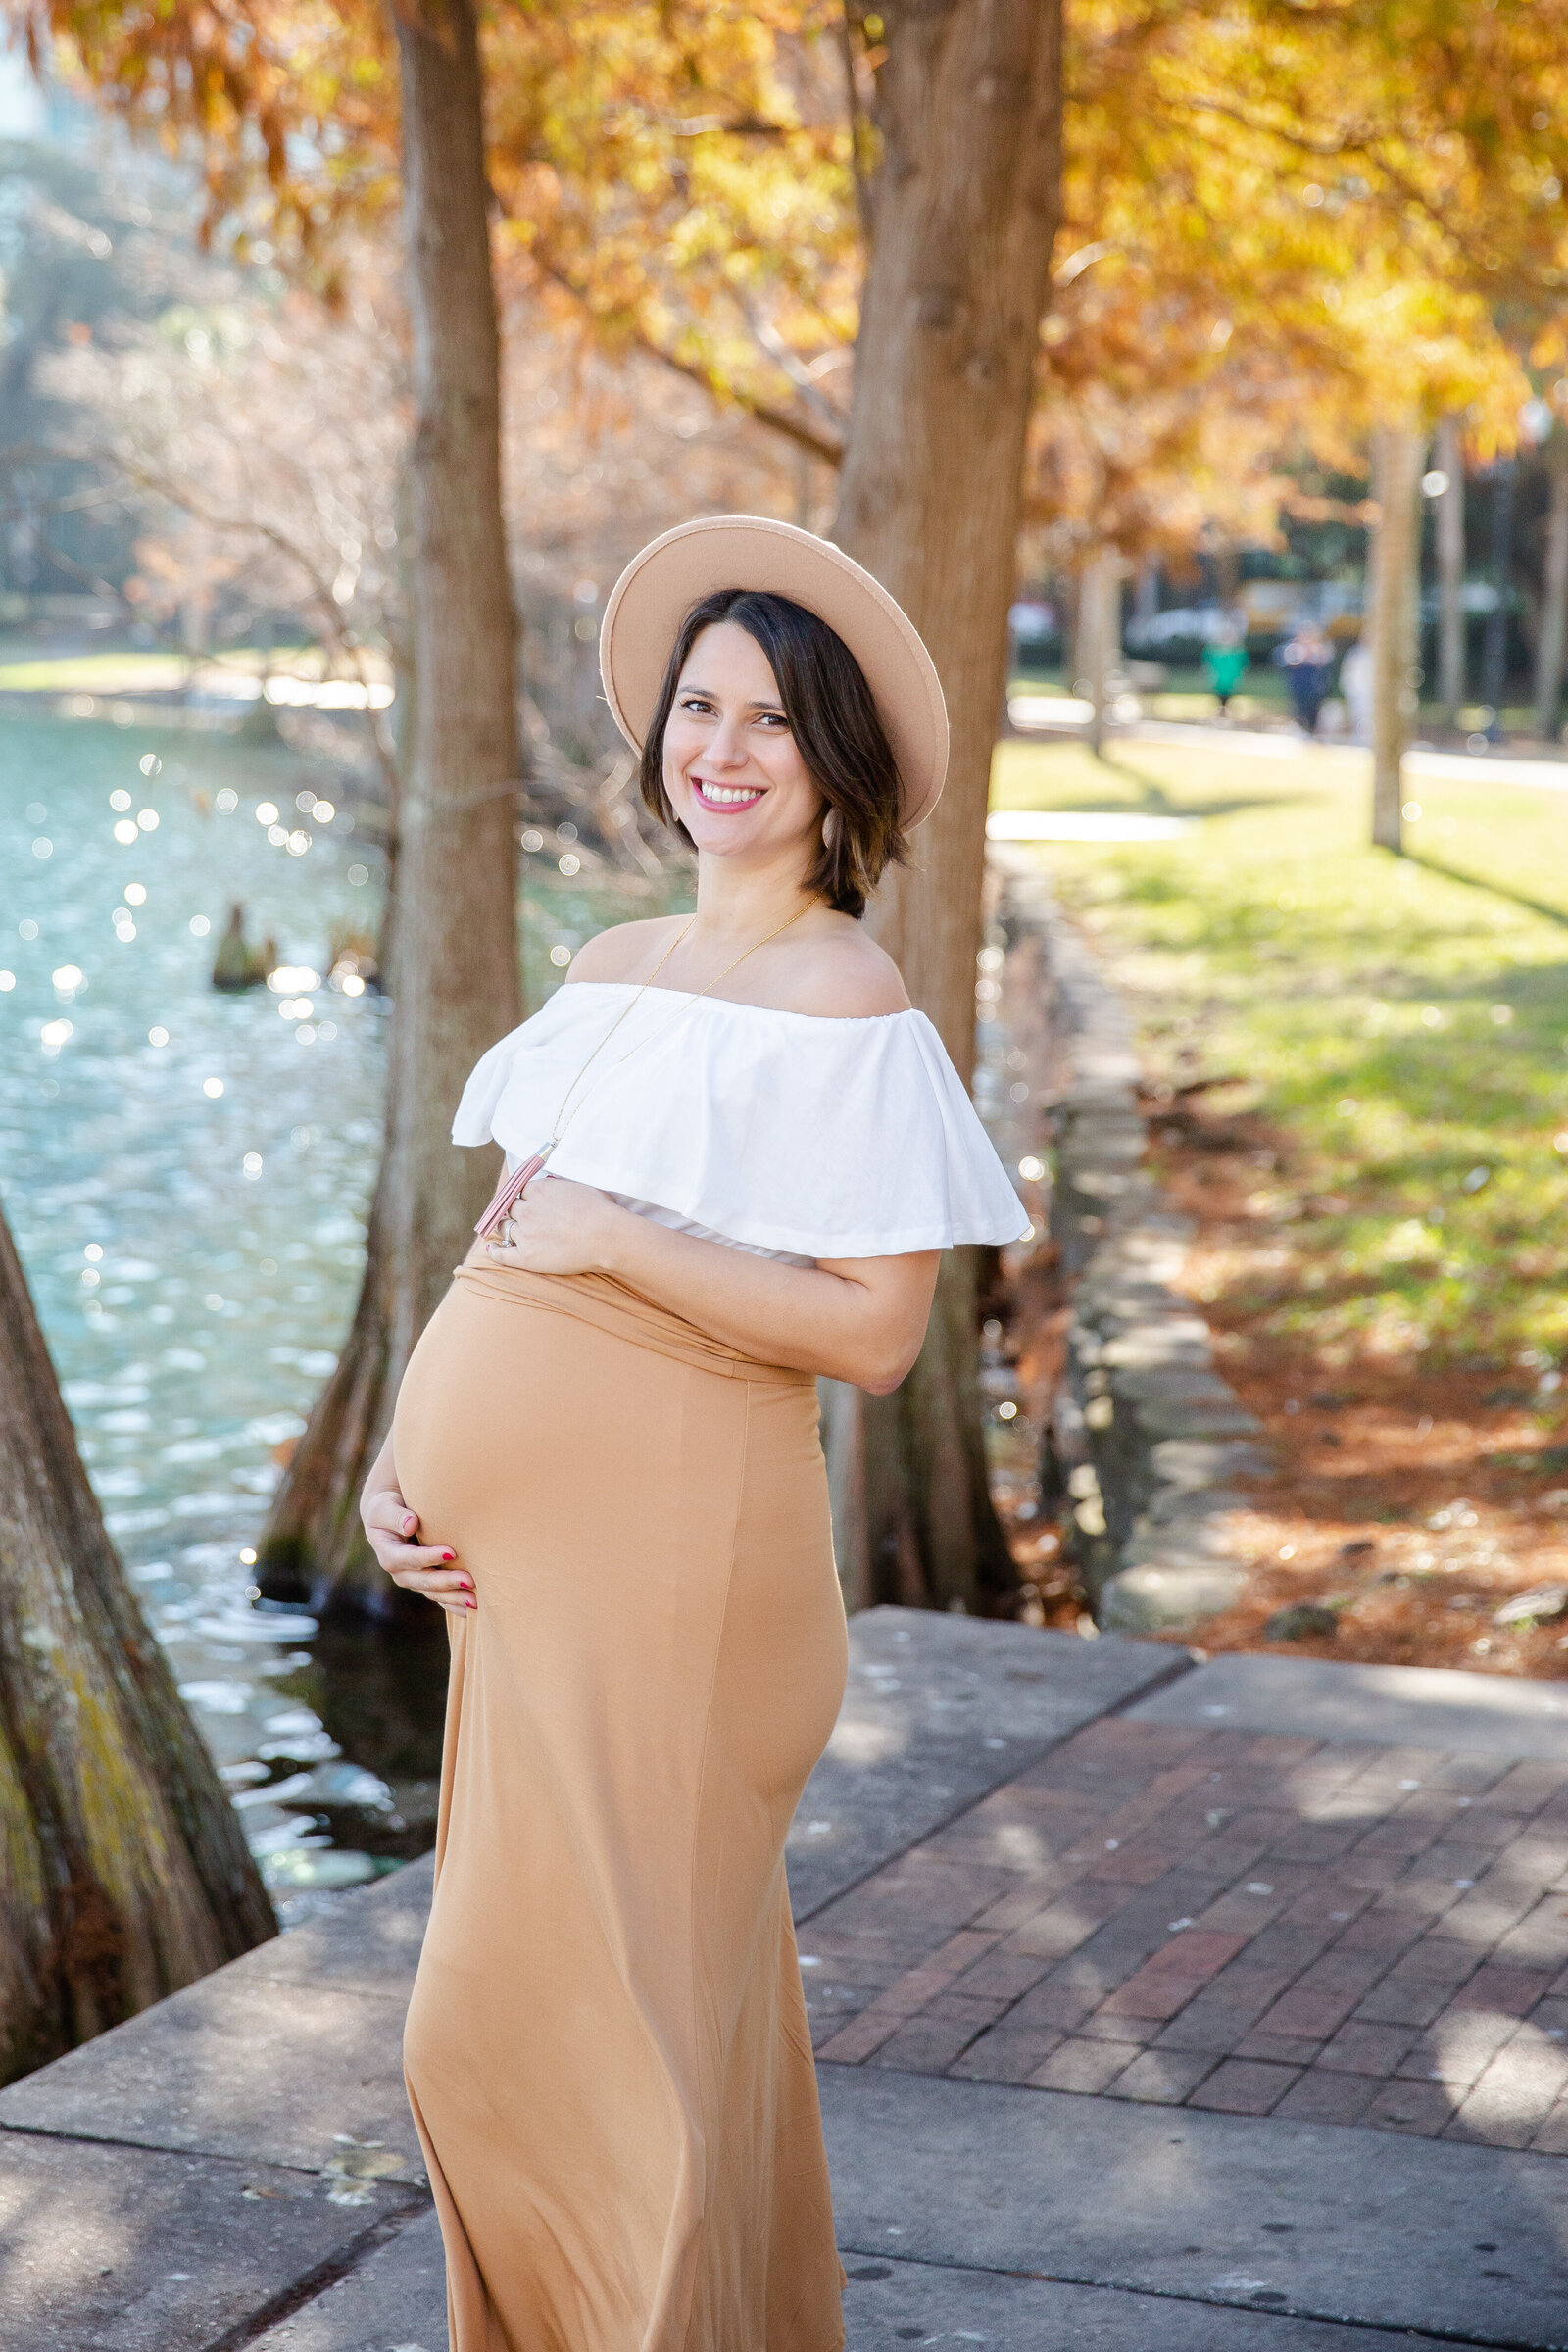 Orlando maternity portrait photographer Riley James.